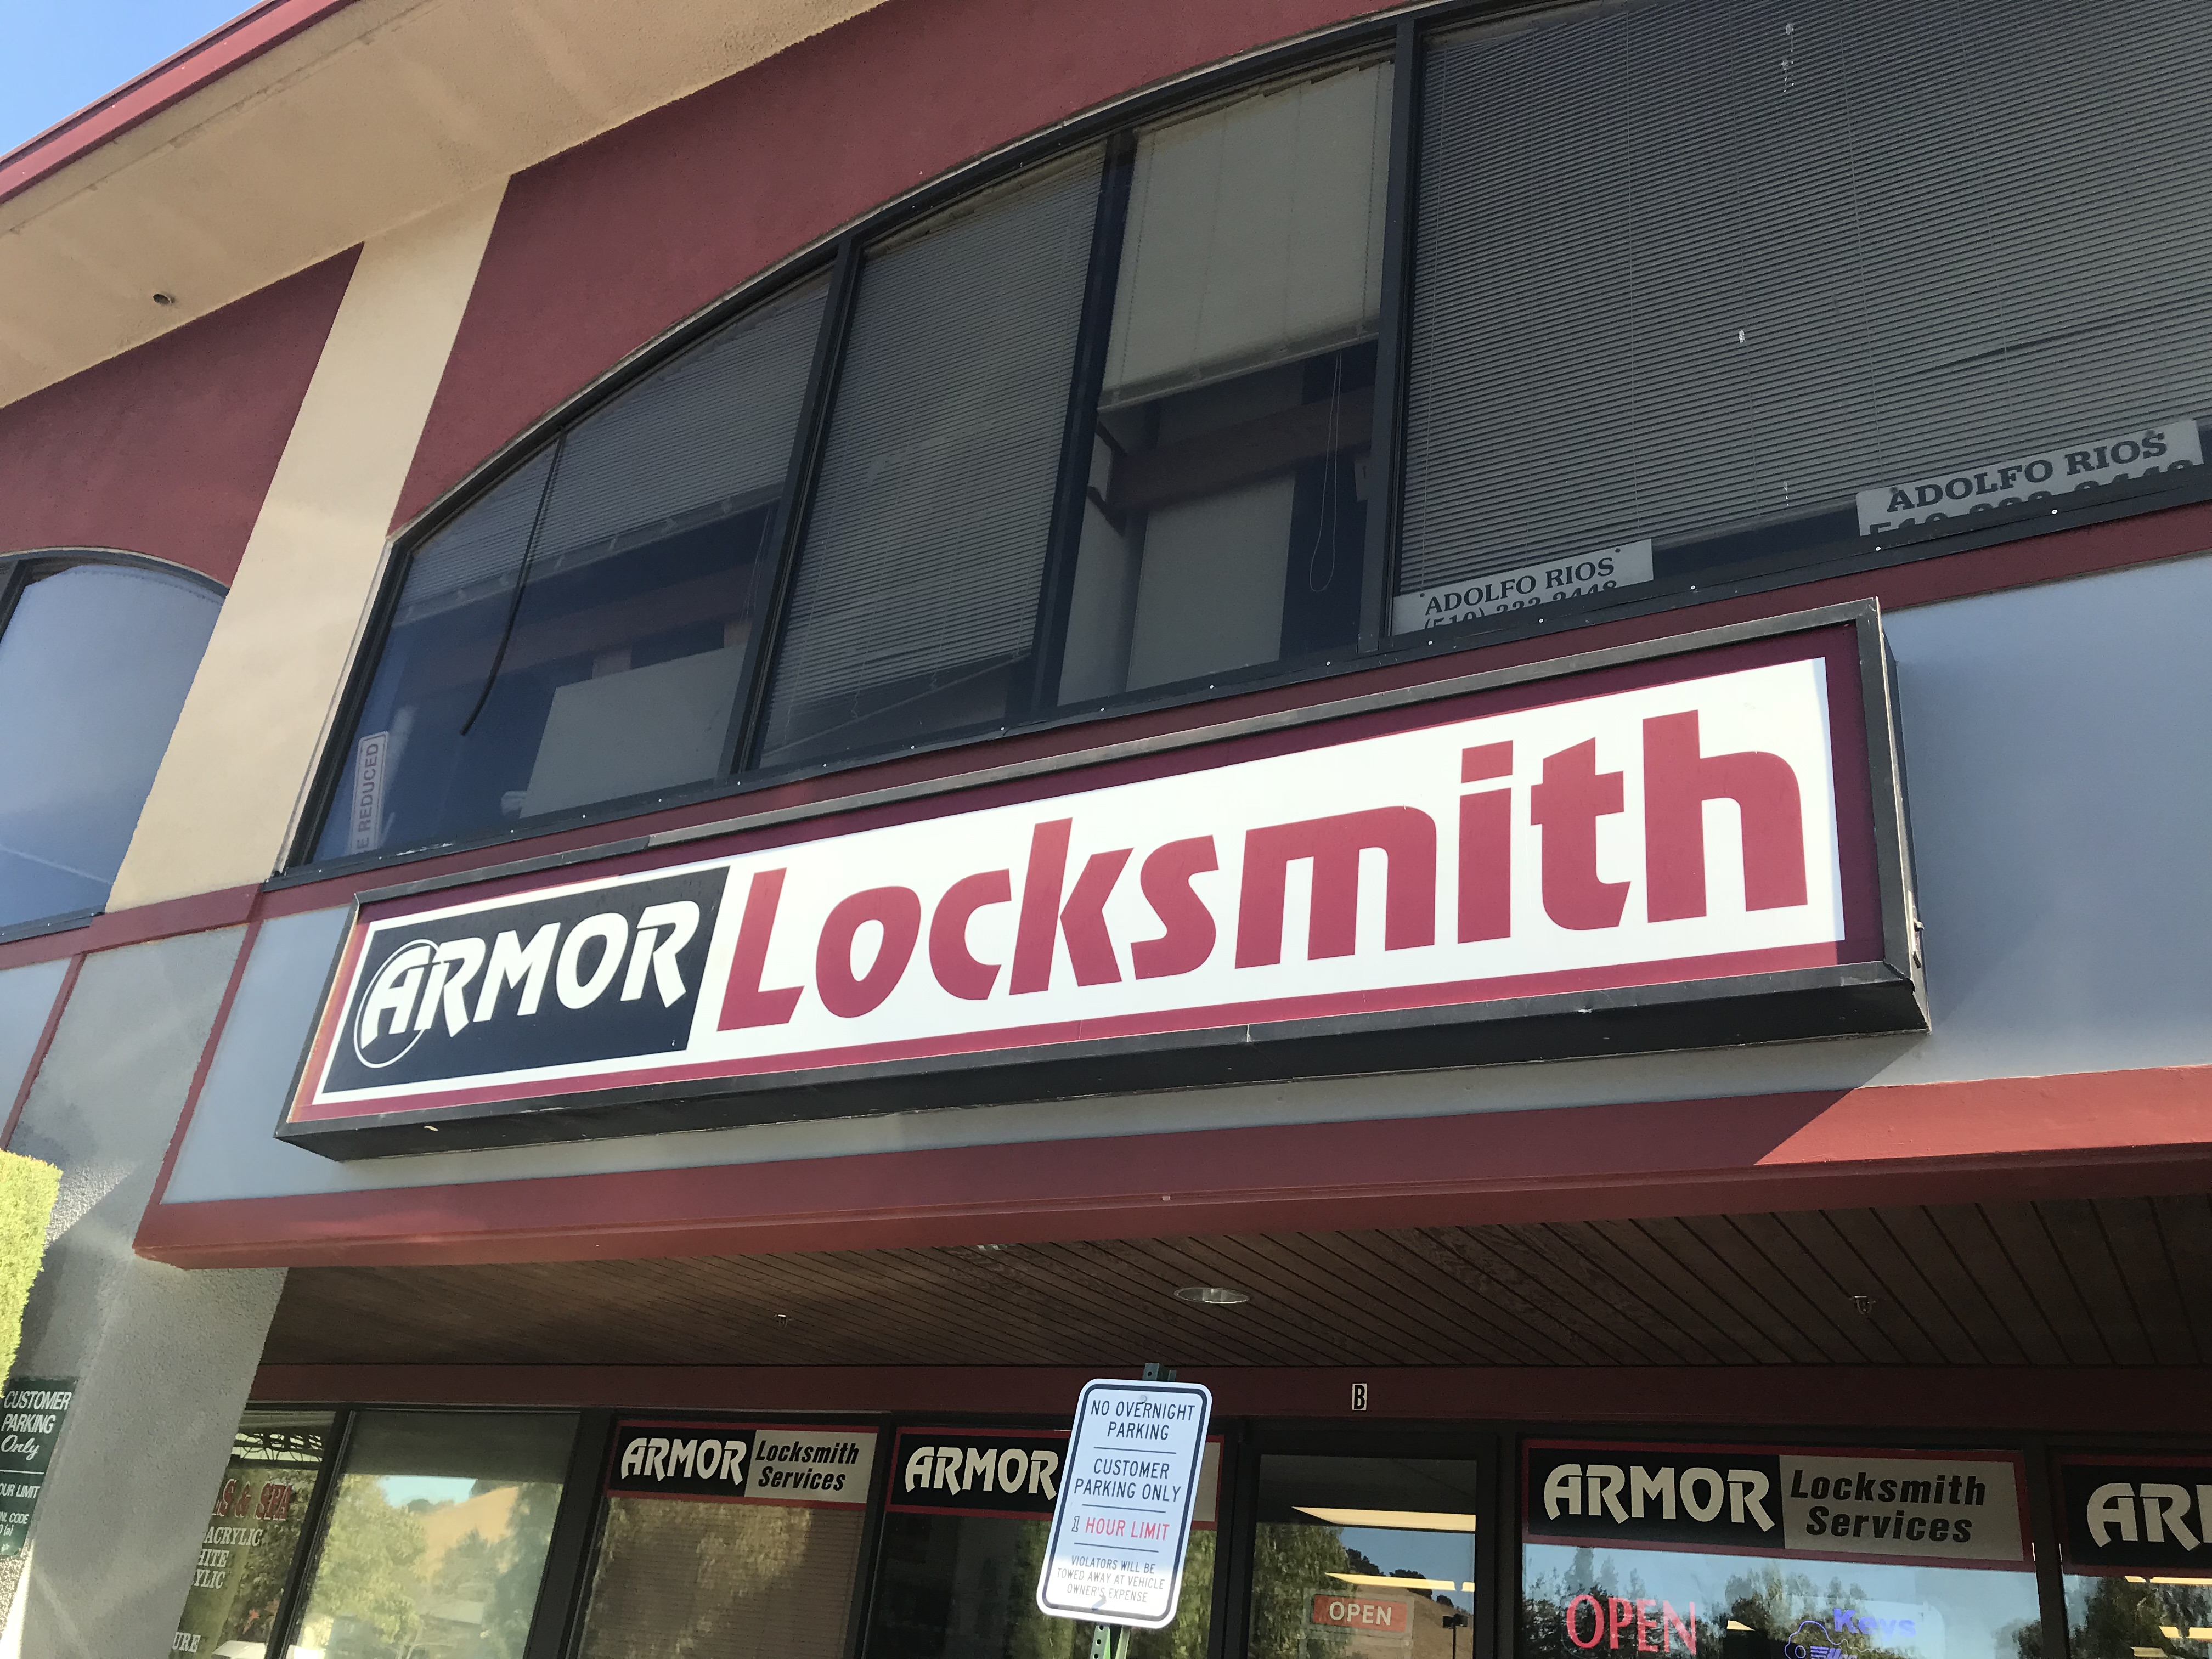 Armor Locksmith Services